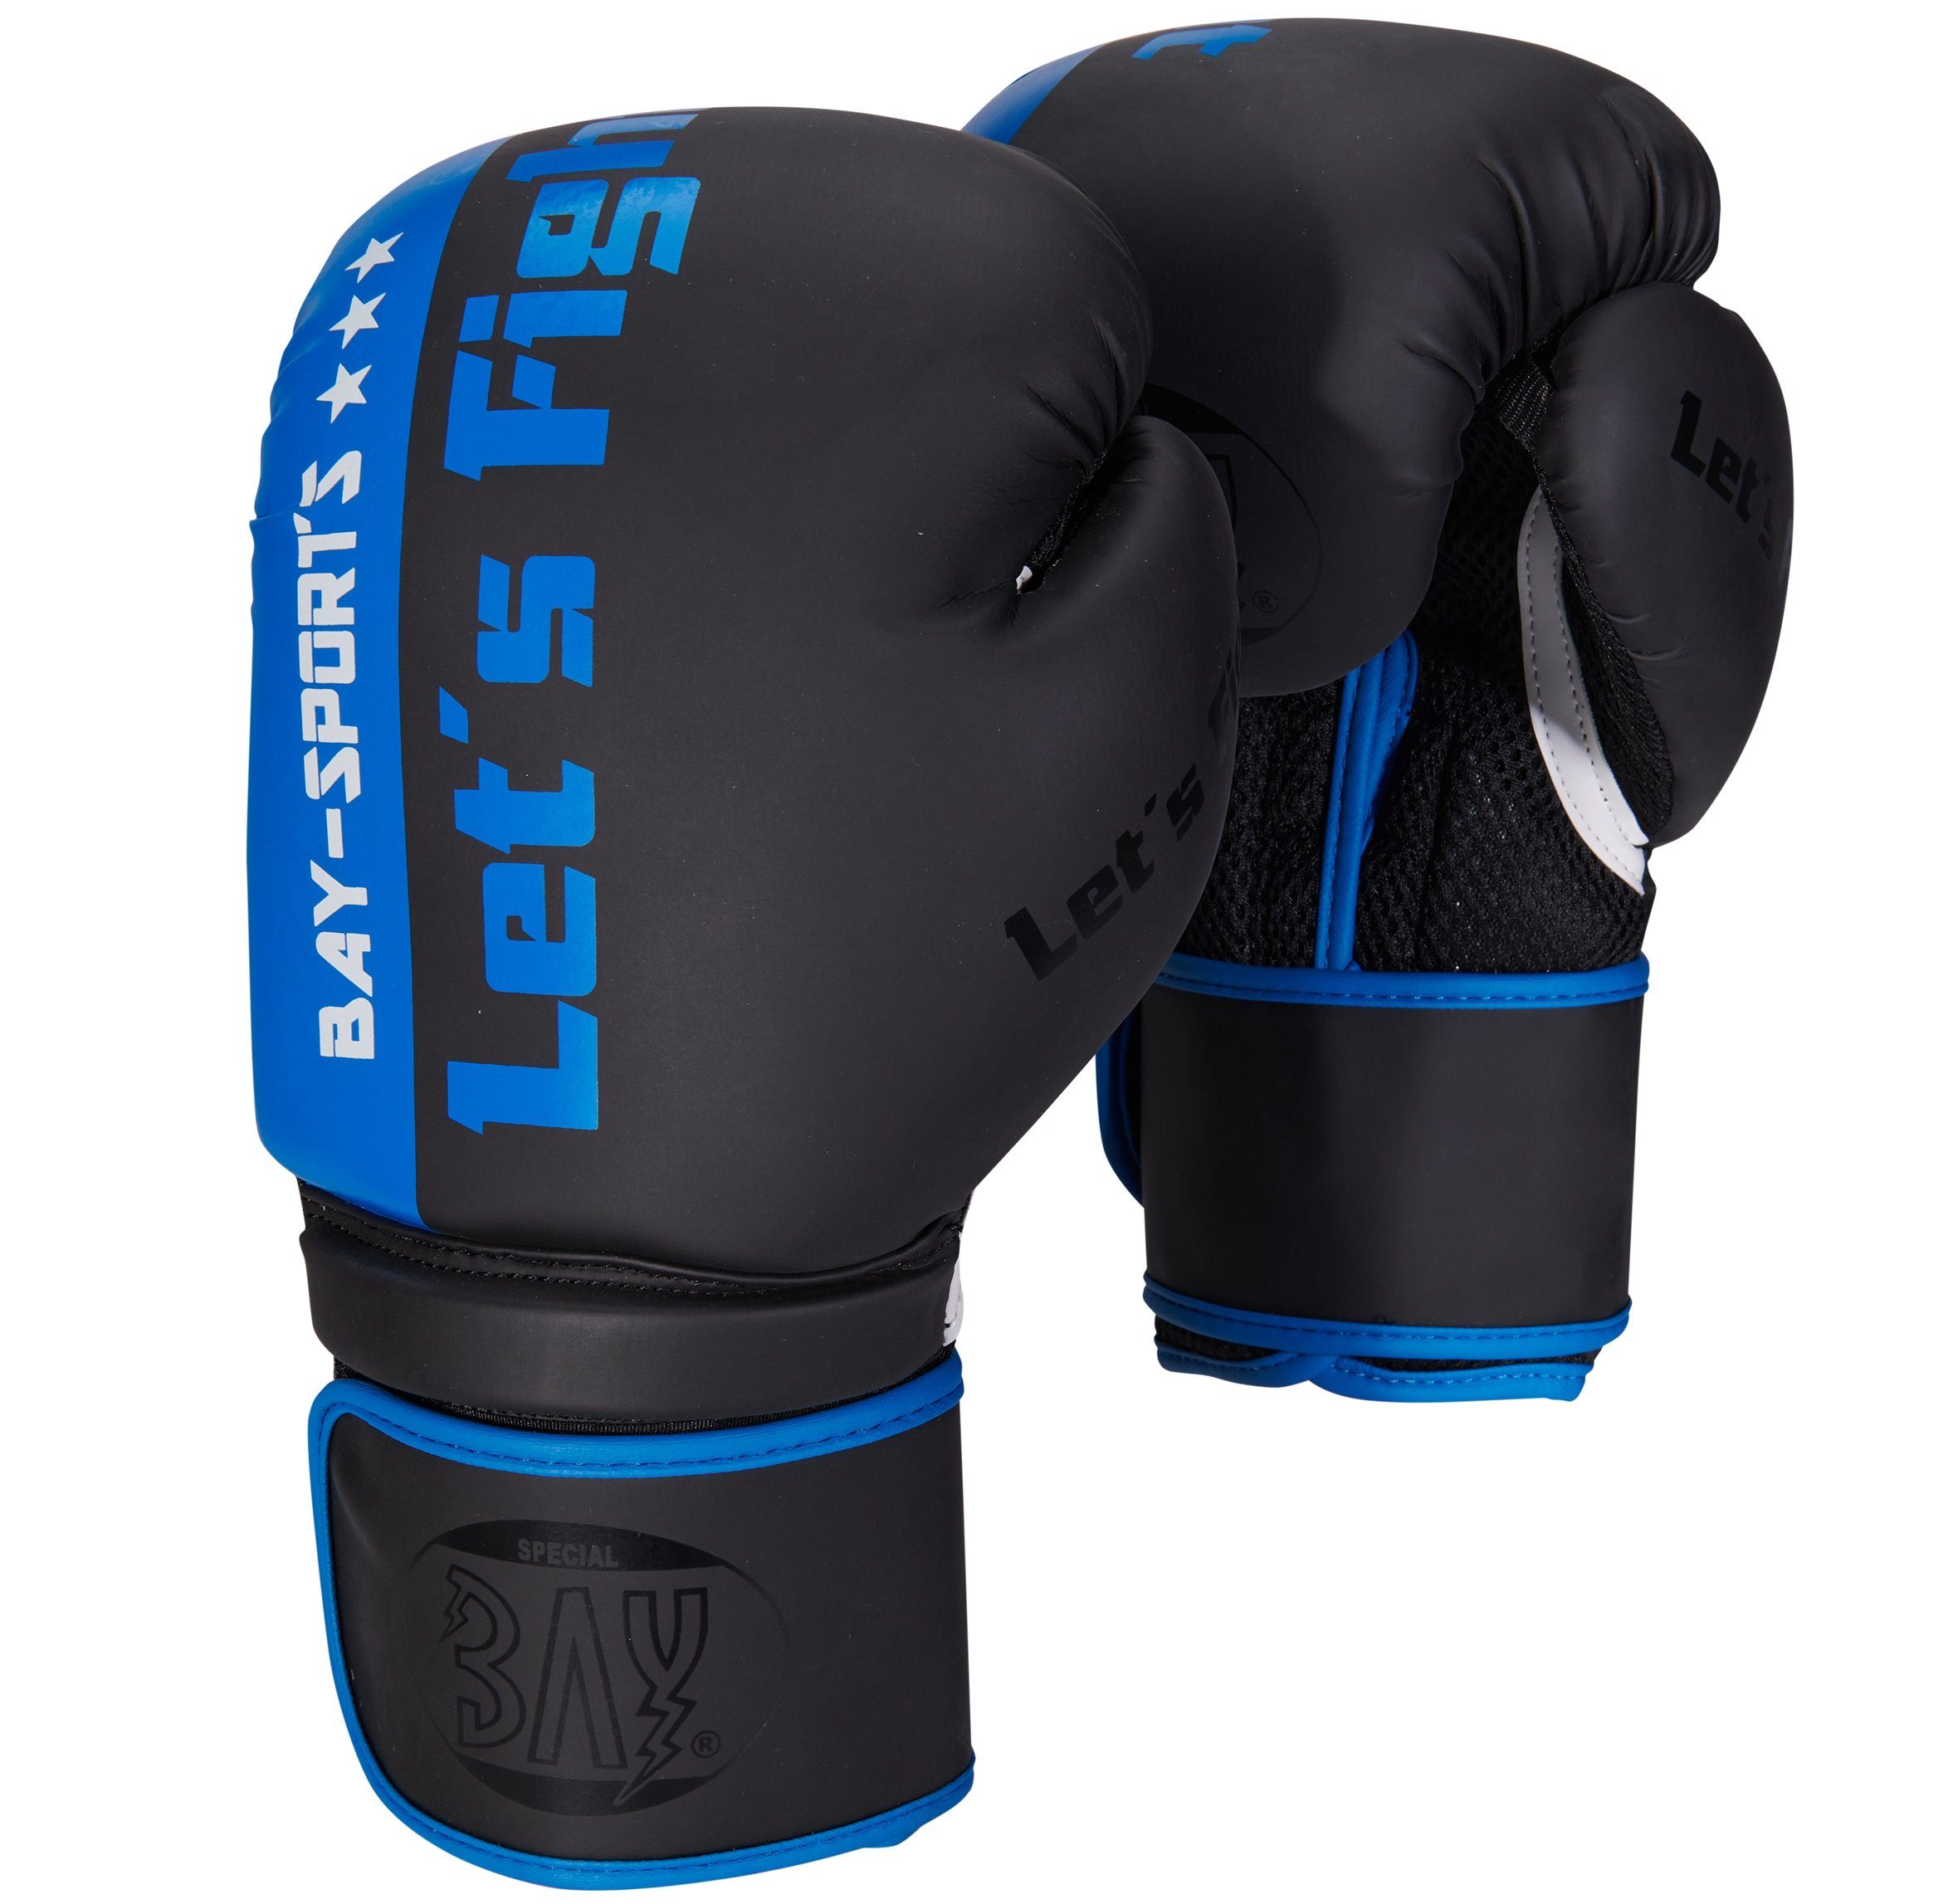 blau BAY-Sports Mesh Fight Lets Boxen Box-Handschuhe Boxhandschuhe Kickboxe